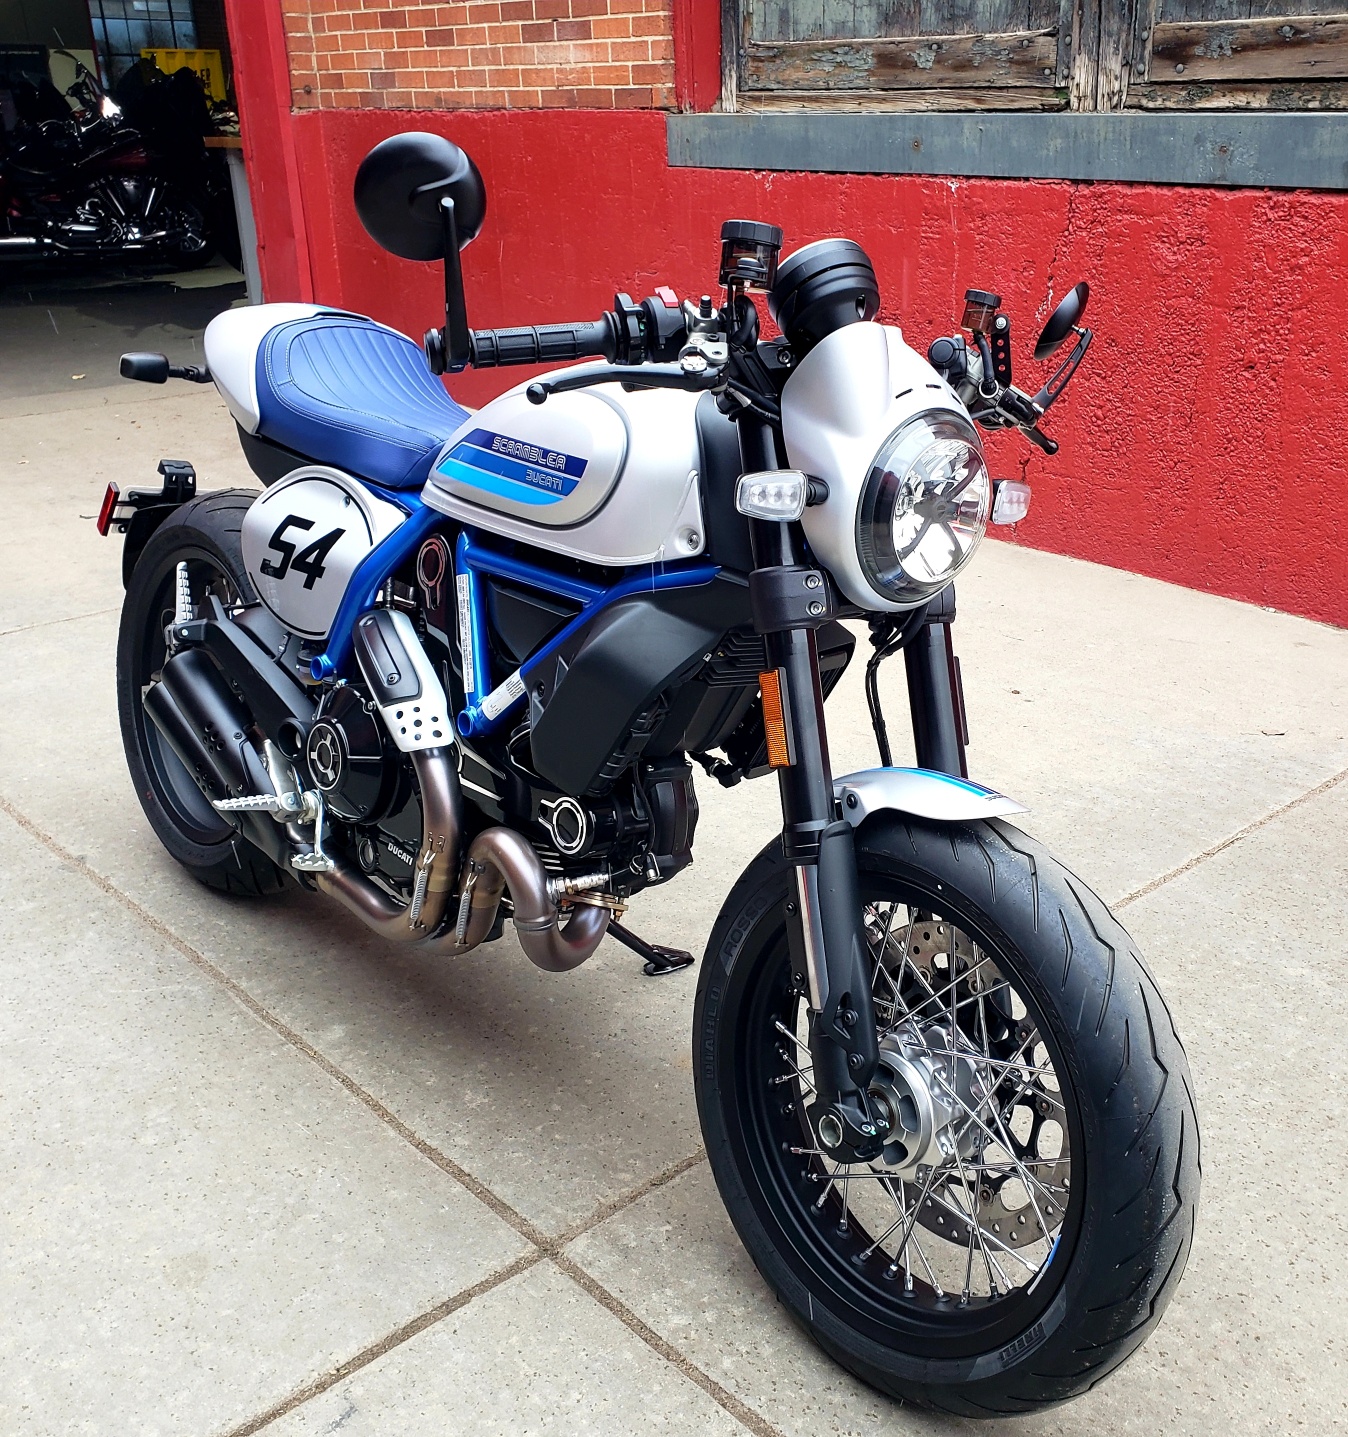 New 2019 DUCATI SCRAMBLER CAFE RACER Motorcycle in Denver #19D50 ...